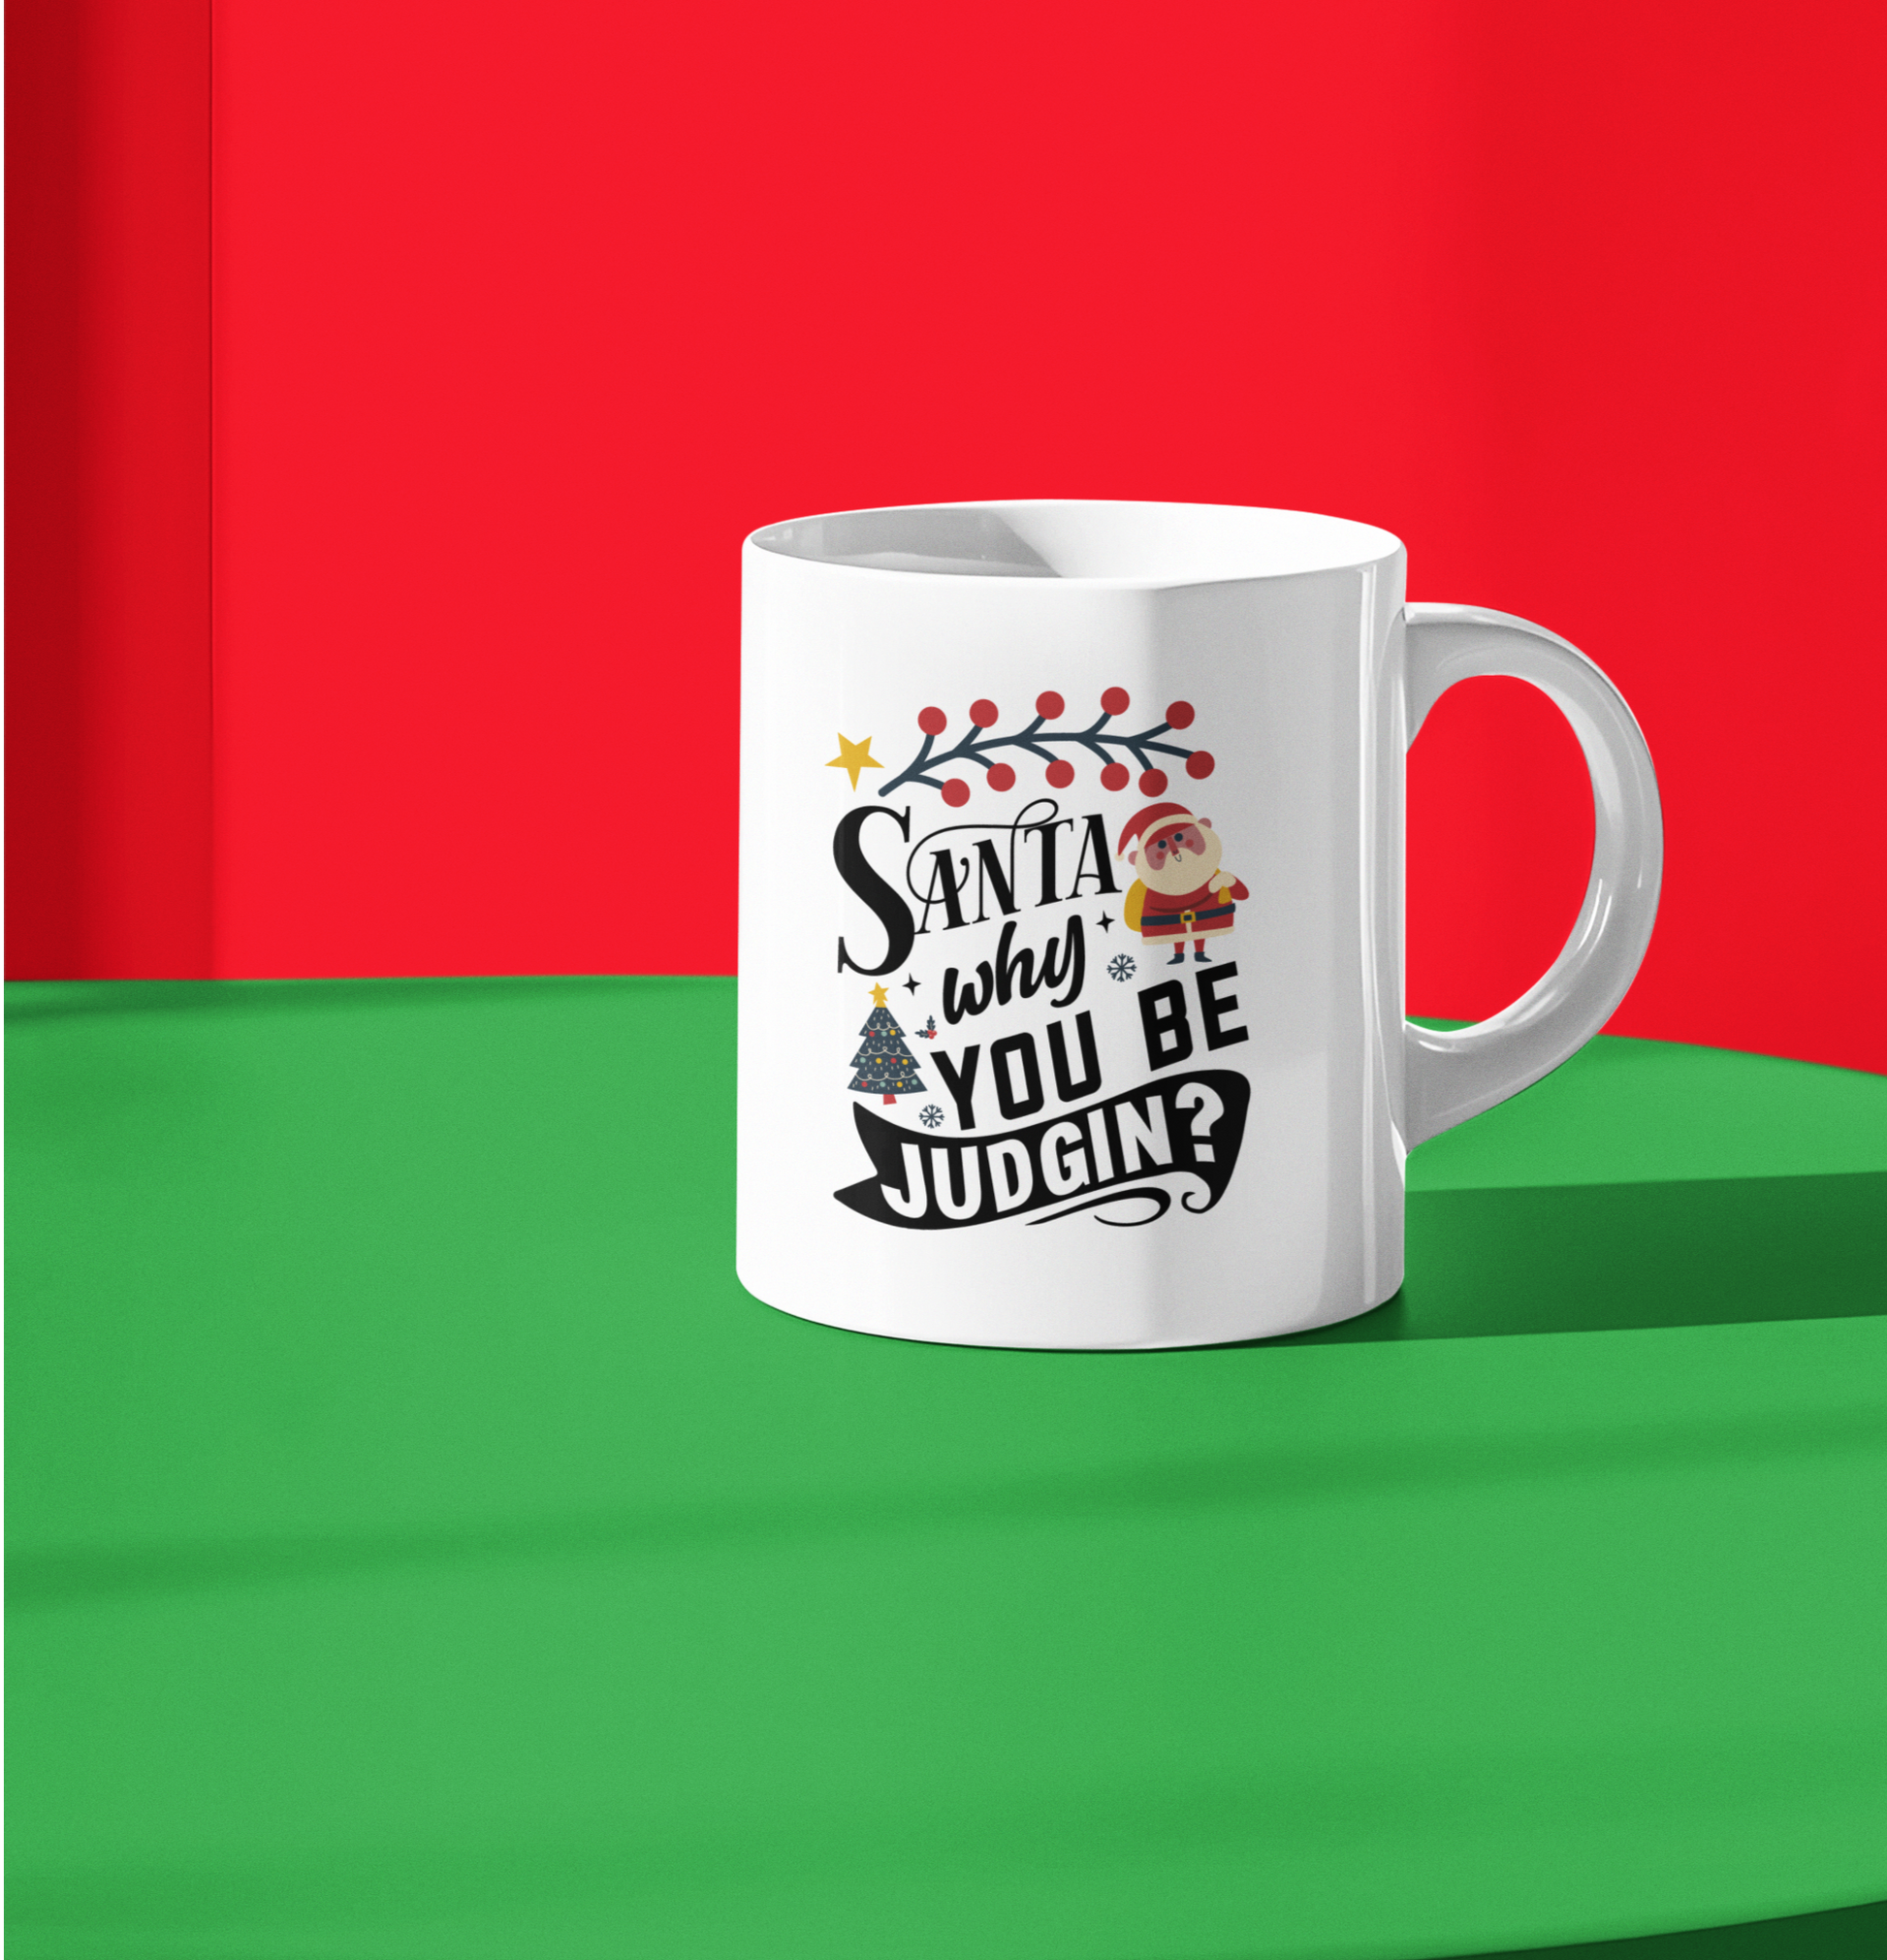 coffee mug that reads " Santa why you be judgin?"